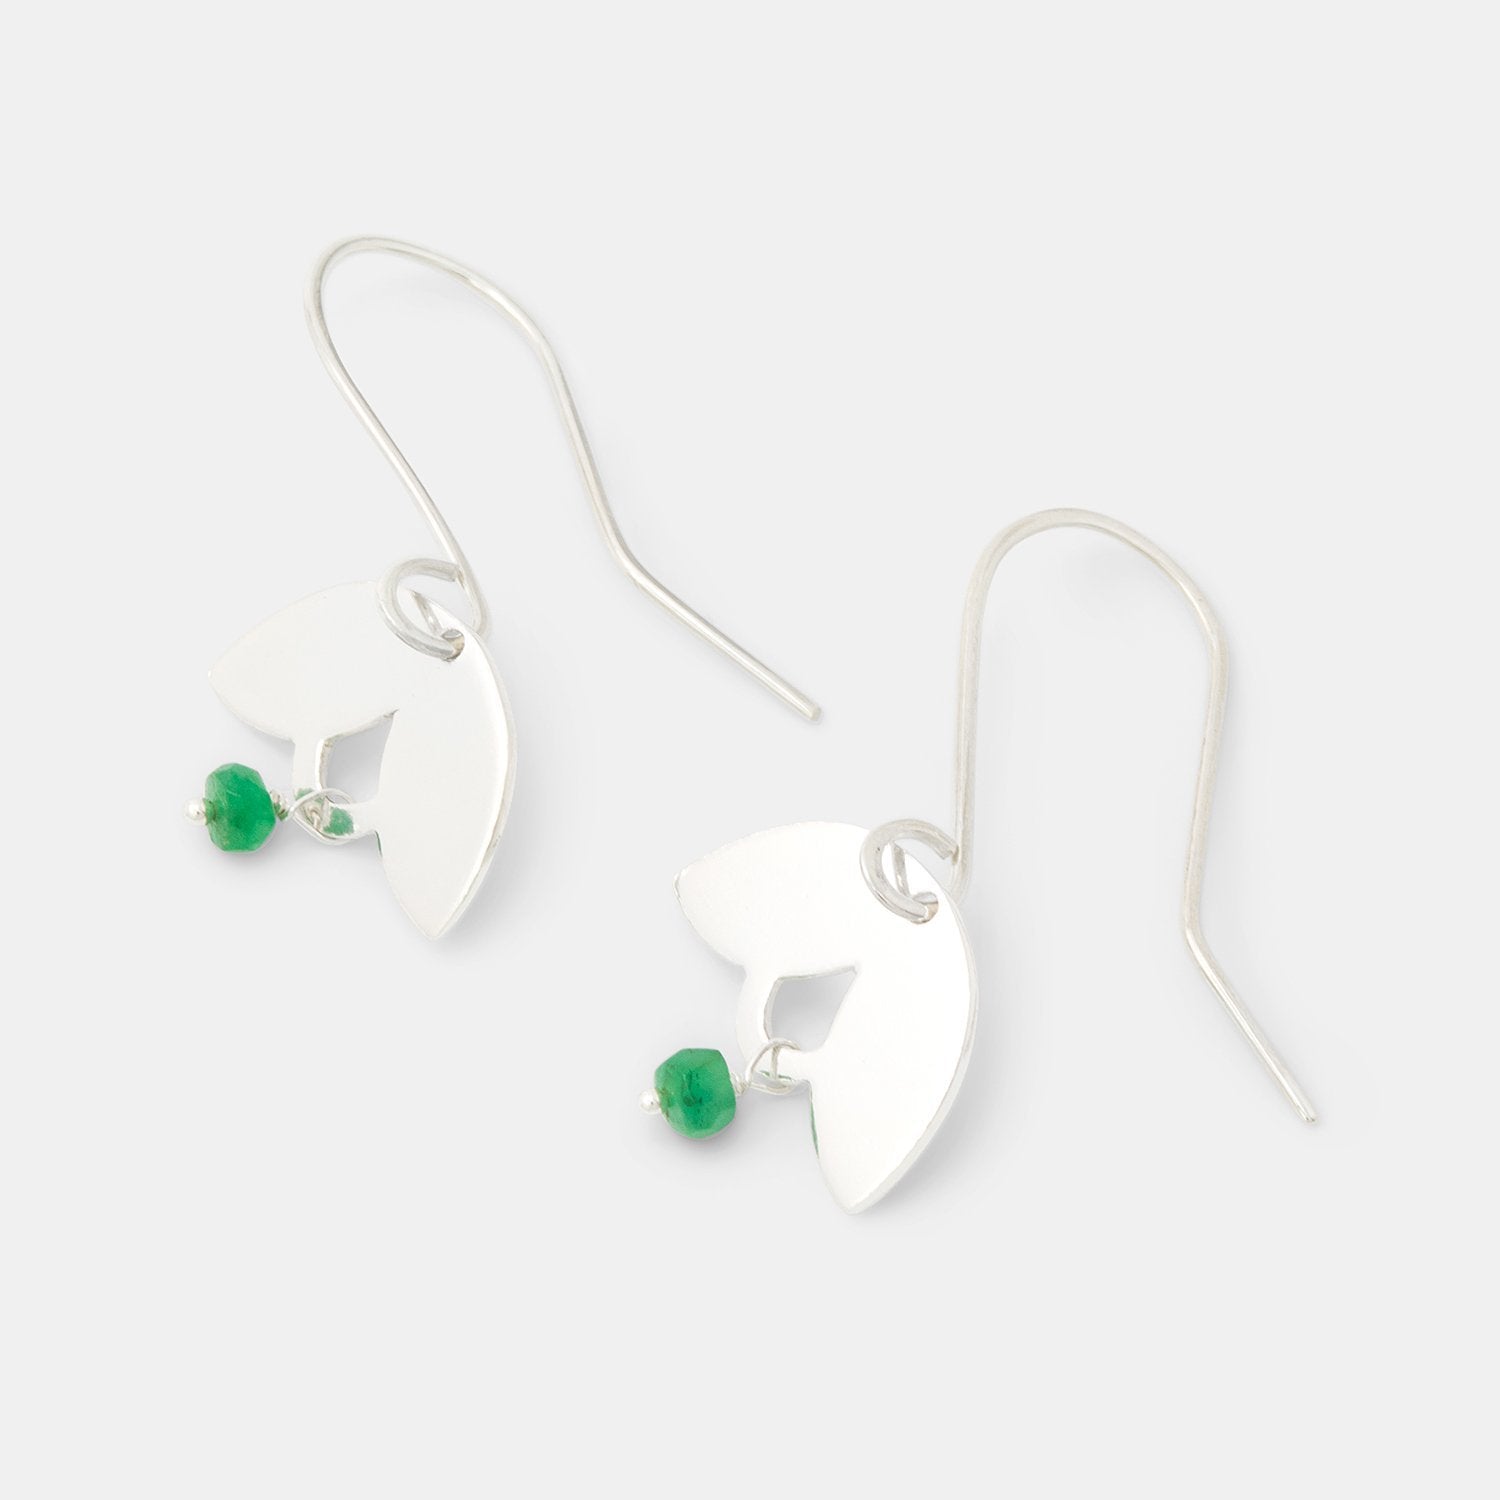 Leaves & emerald drop earrings - Simone Walsh Jewellery Australia